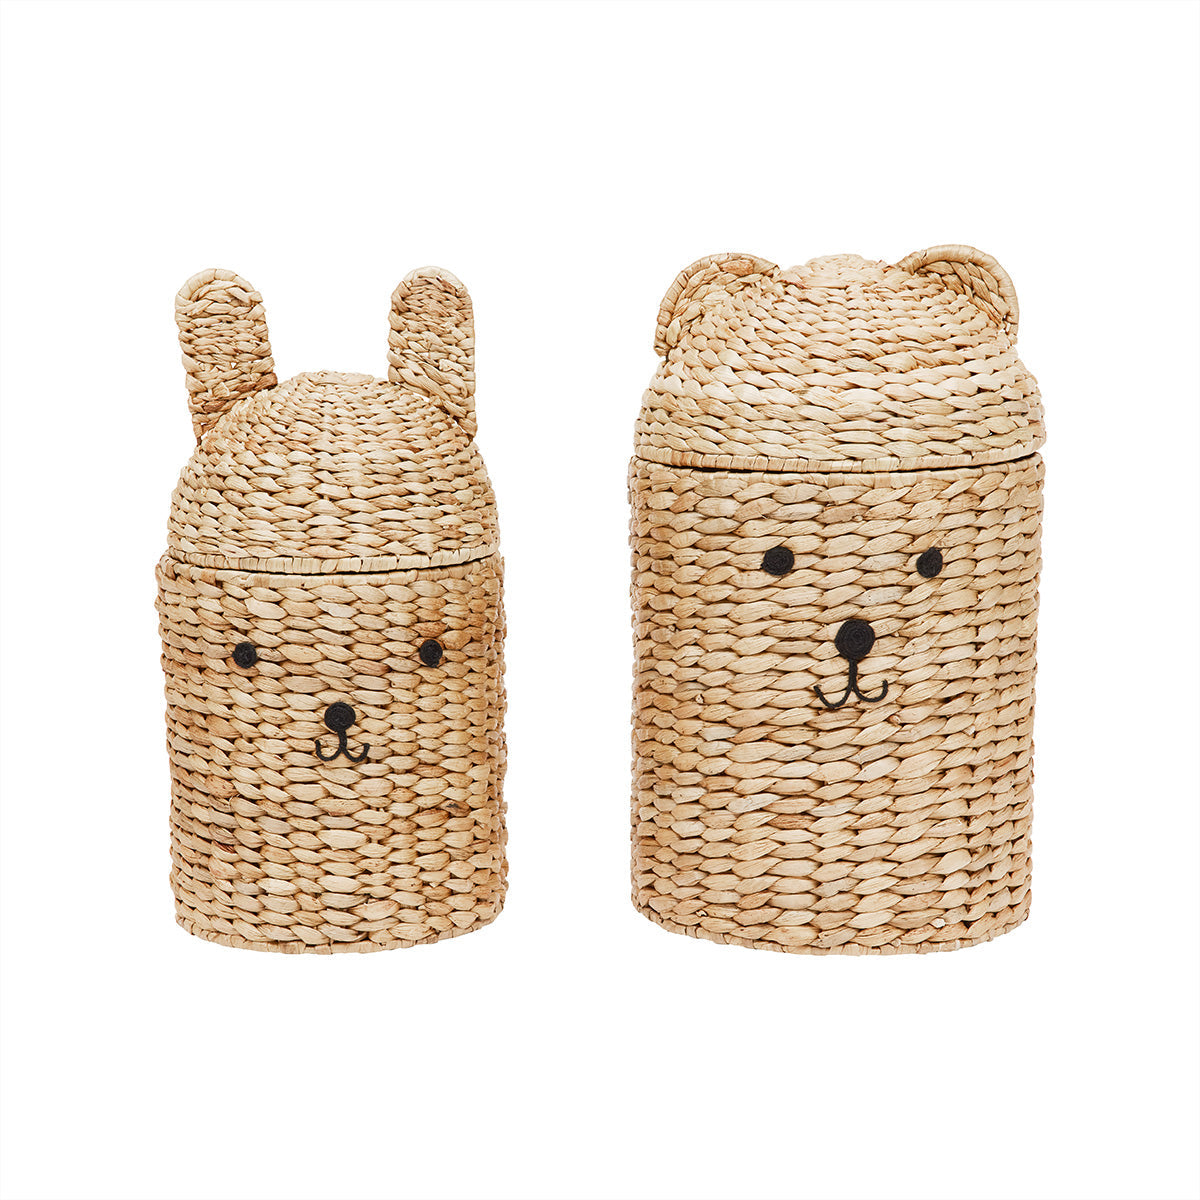 OYOY MINI Bear & Rabbit Storage Basket - Set of 2 Storage 901 Nature